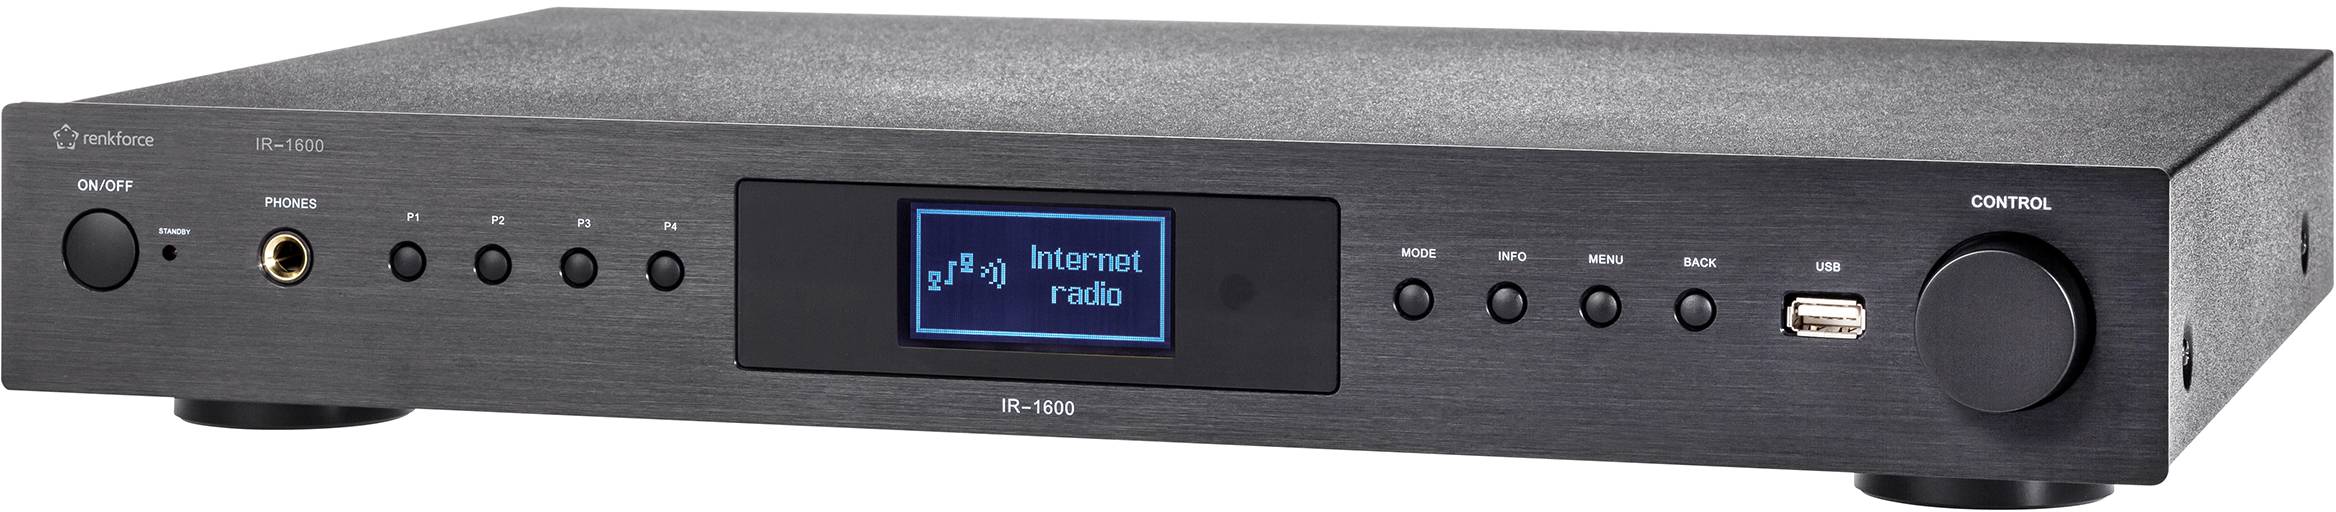 Dicht Wissen Intens Renkforce IR-1600 Hi-Fi internet radio tuner Black Wi-Fi | Conrad.com